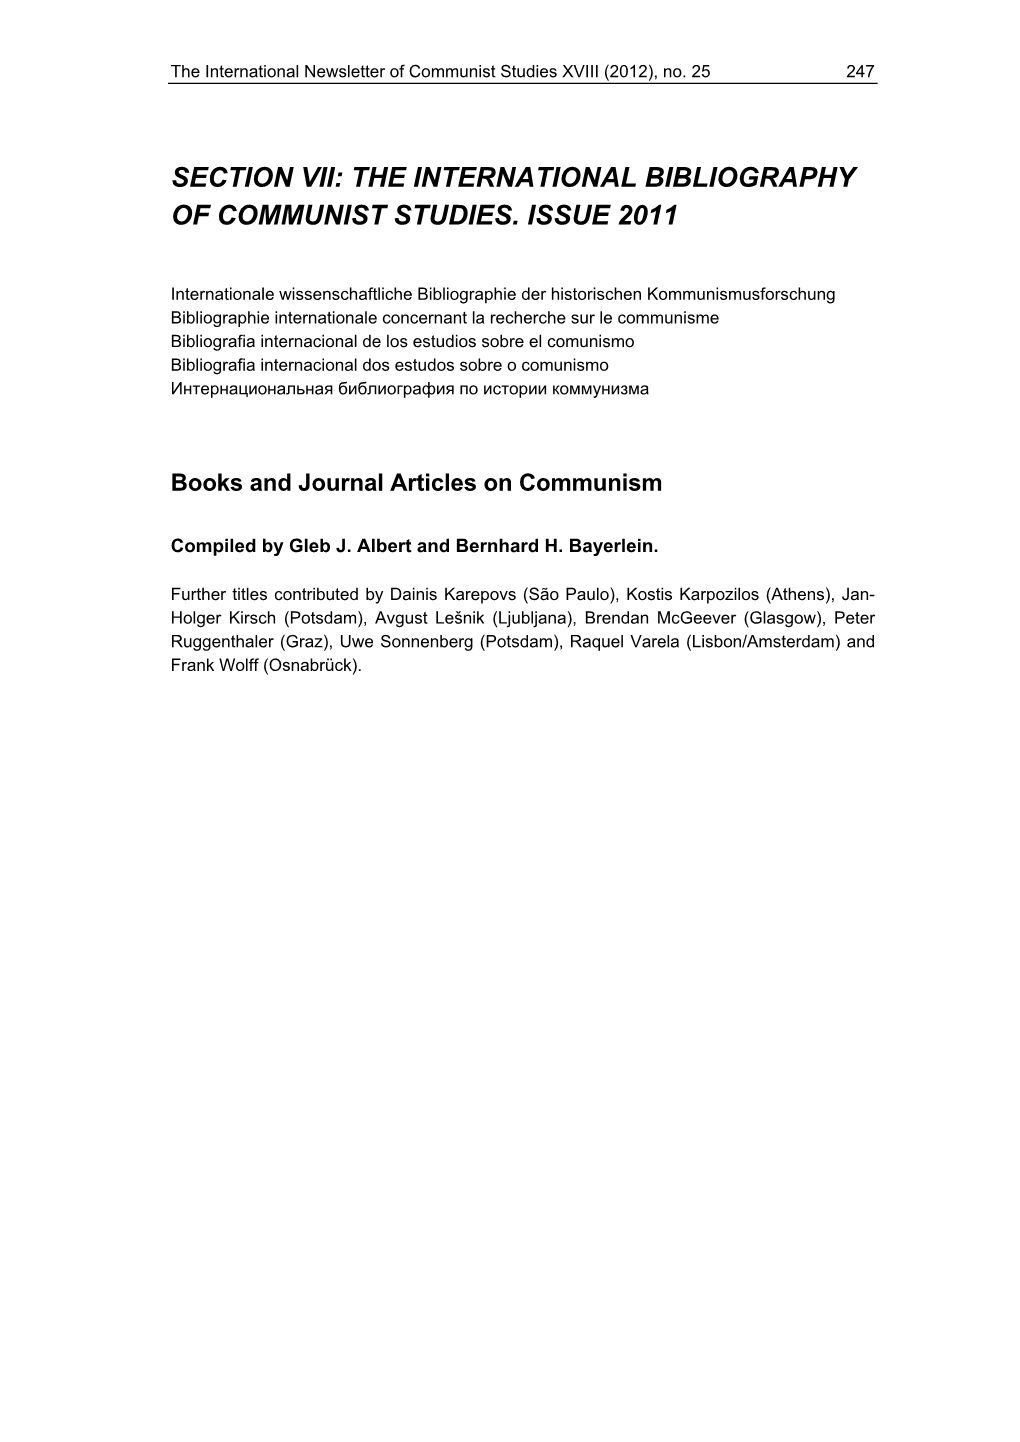 The International Bibliography of Communist Studies. Issue 2011